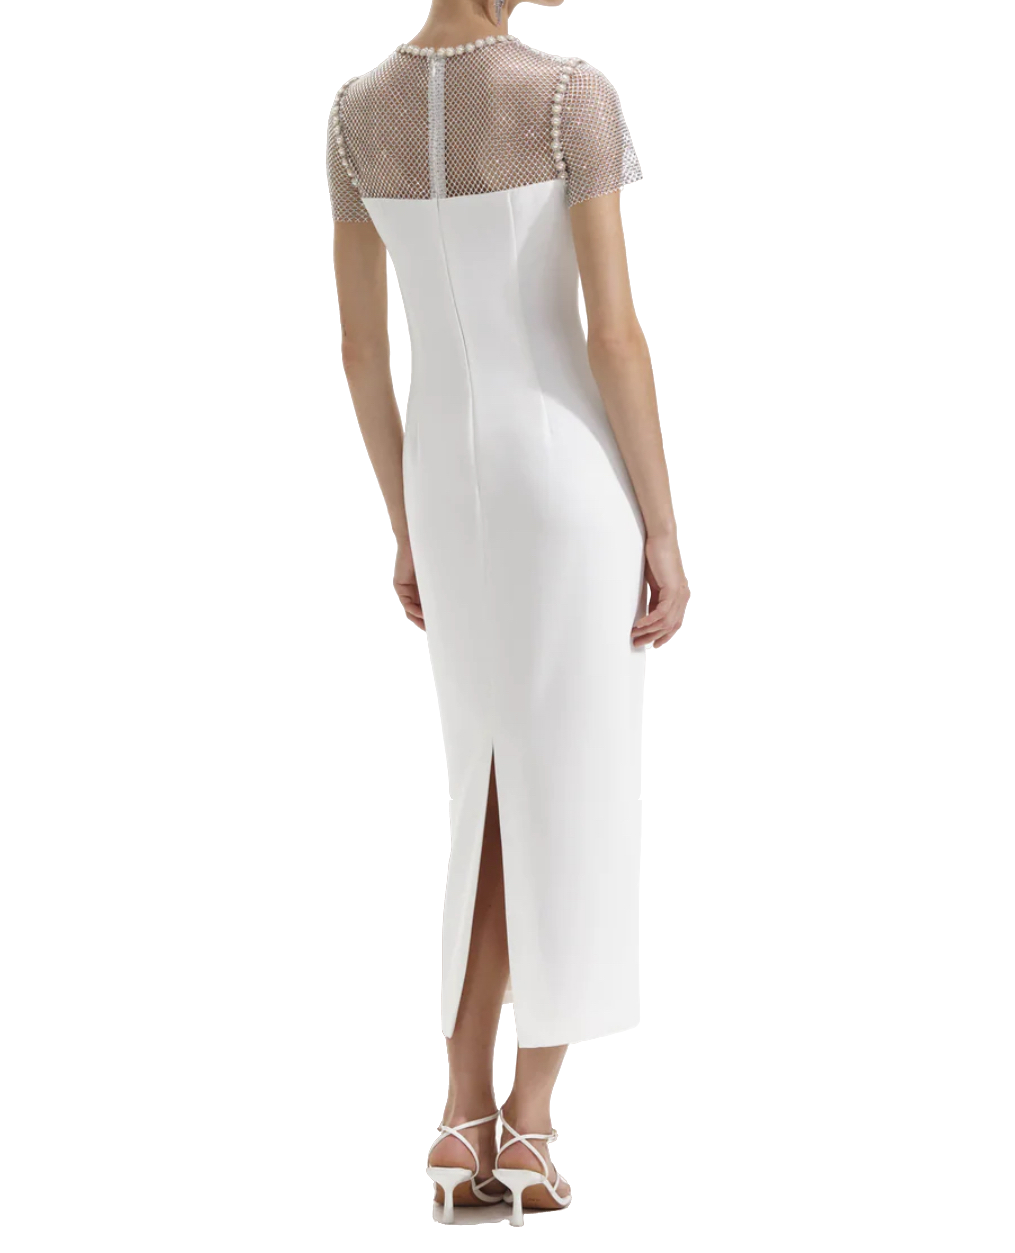 Self-Portrait White Diamante Crepe Midi Dress BNWT UK 4